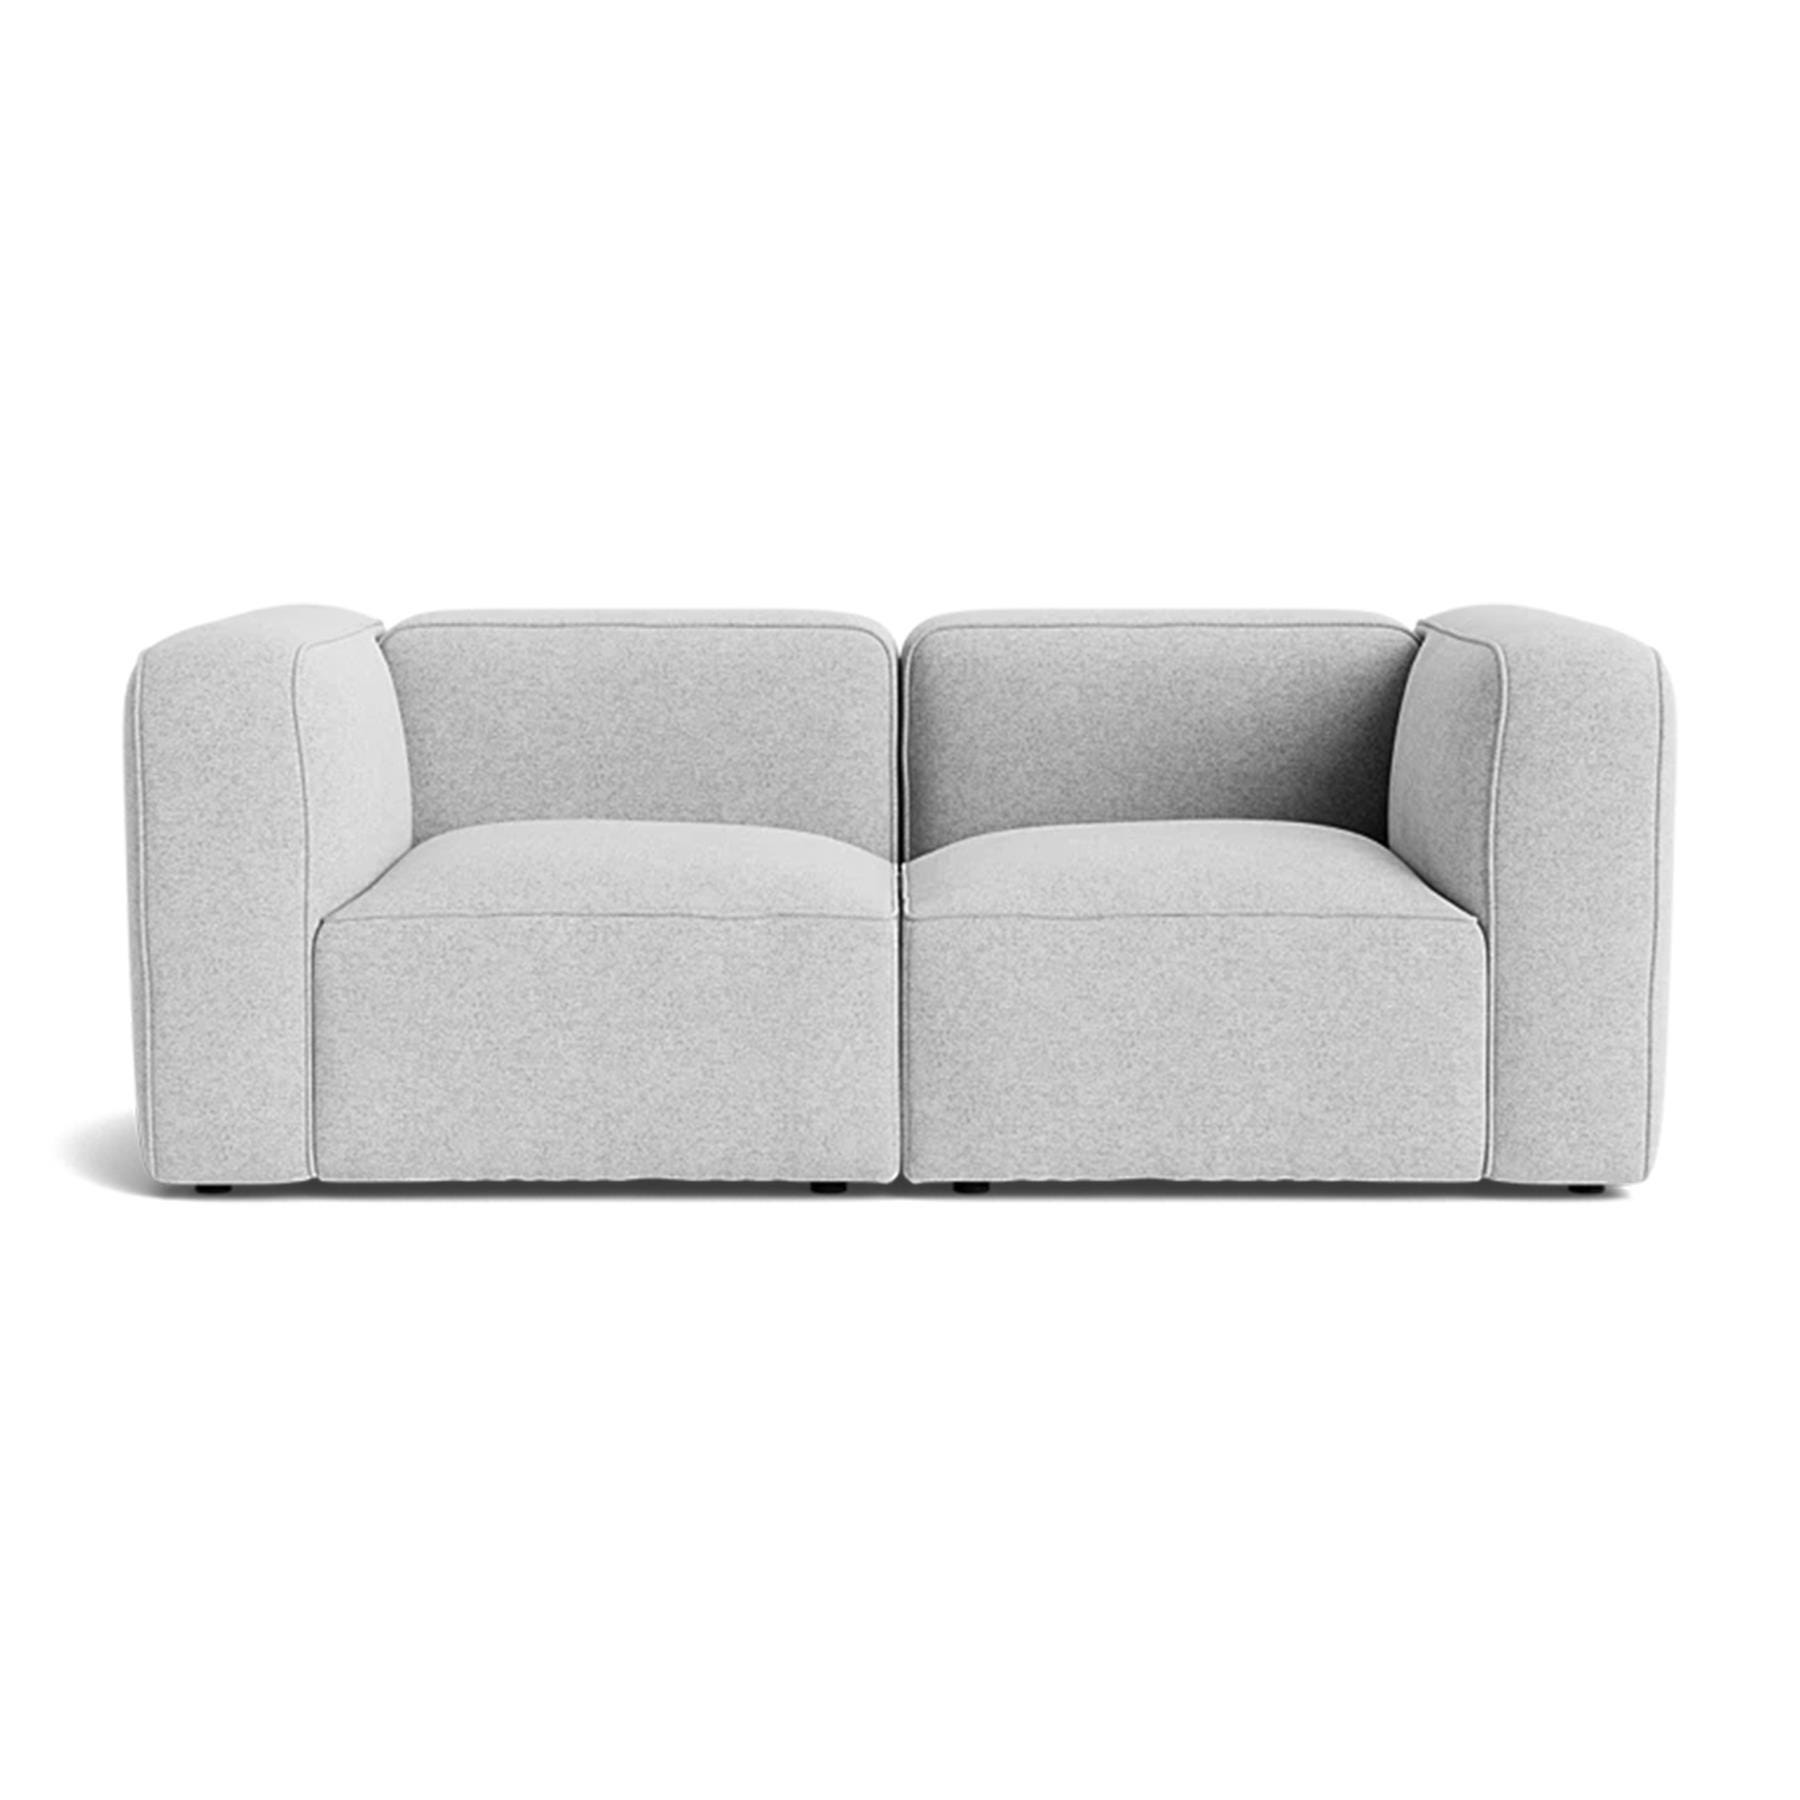 Make Nordic Basecamp 2 Seater Sofa Hallingdal 116 Grey Designer Furniture From Holloways Of Ludlow